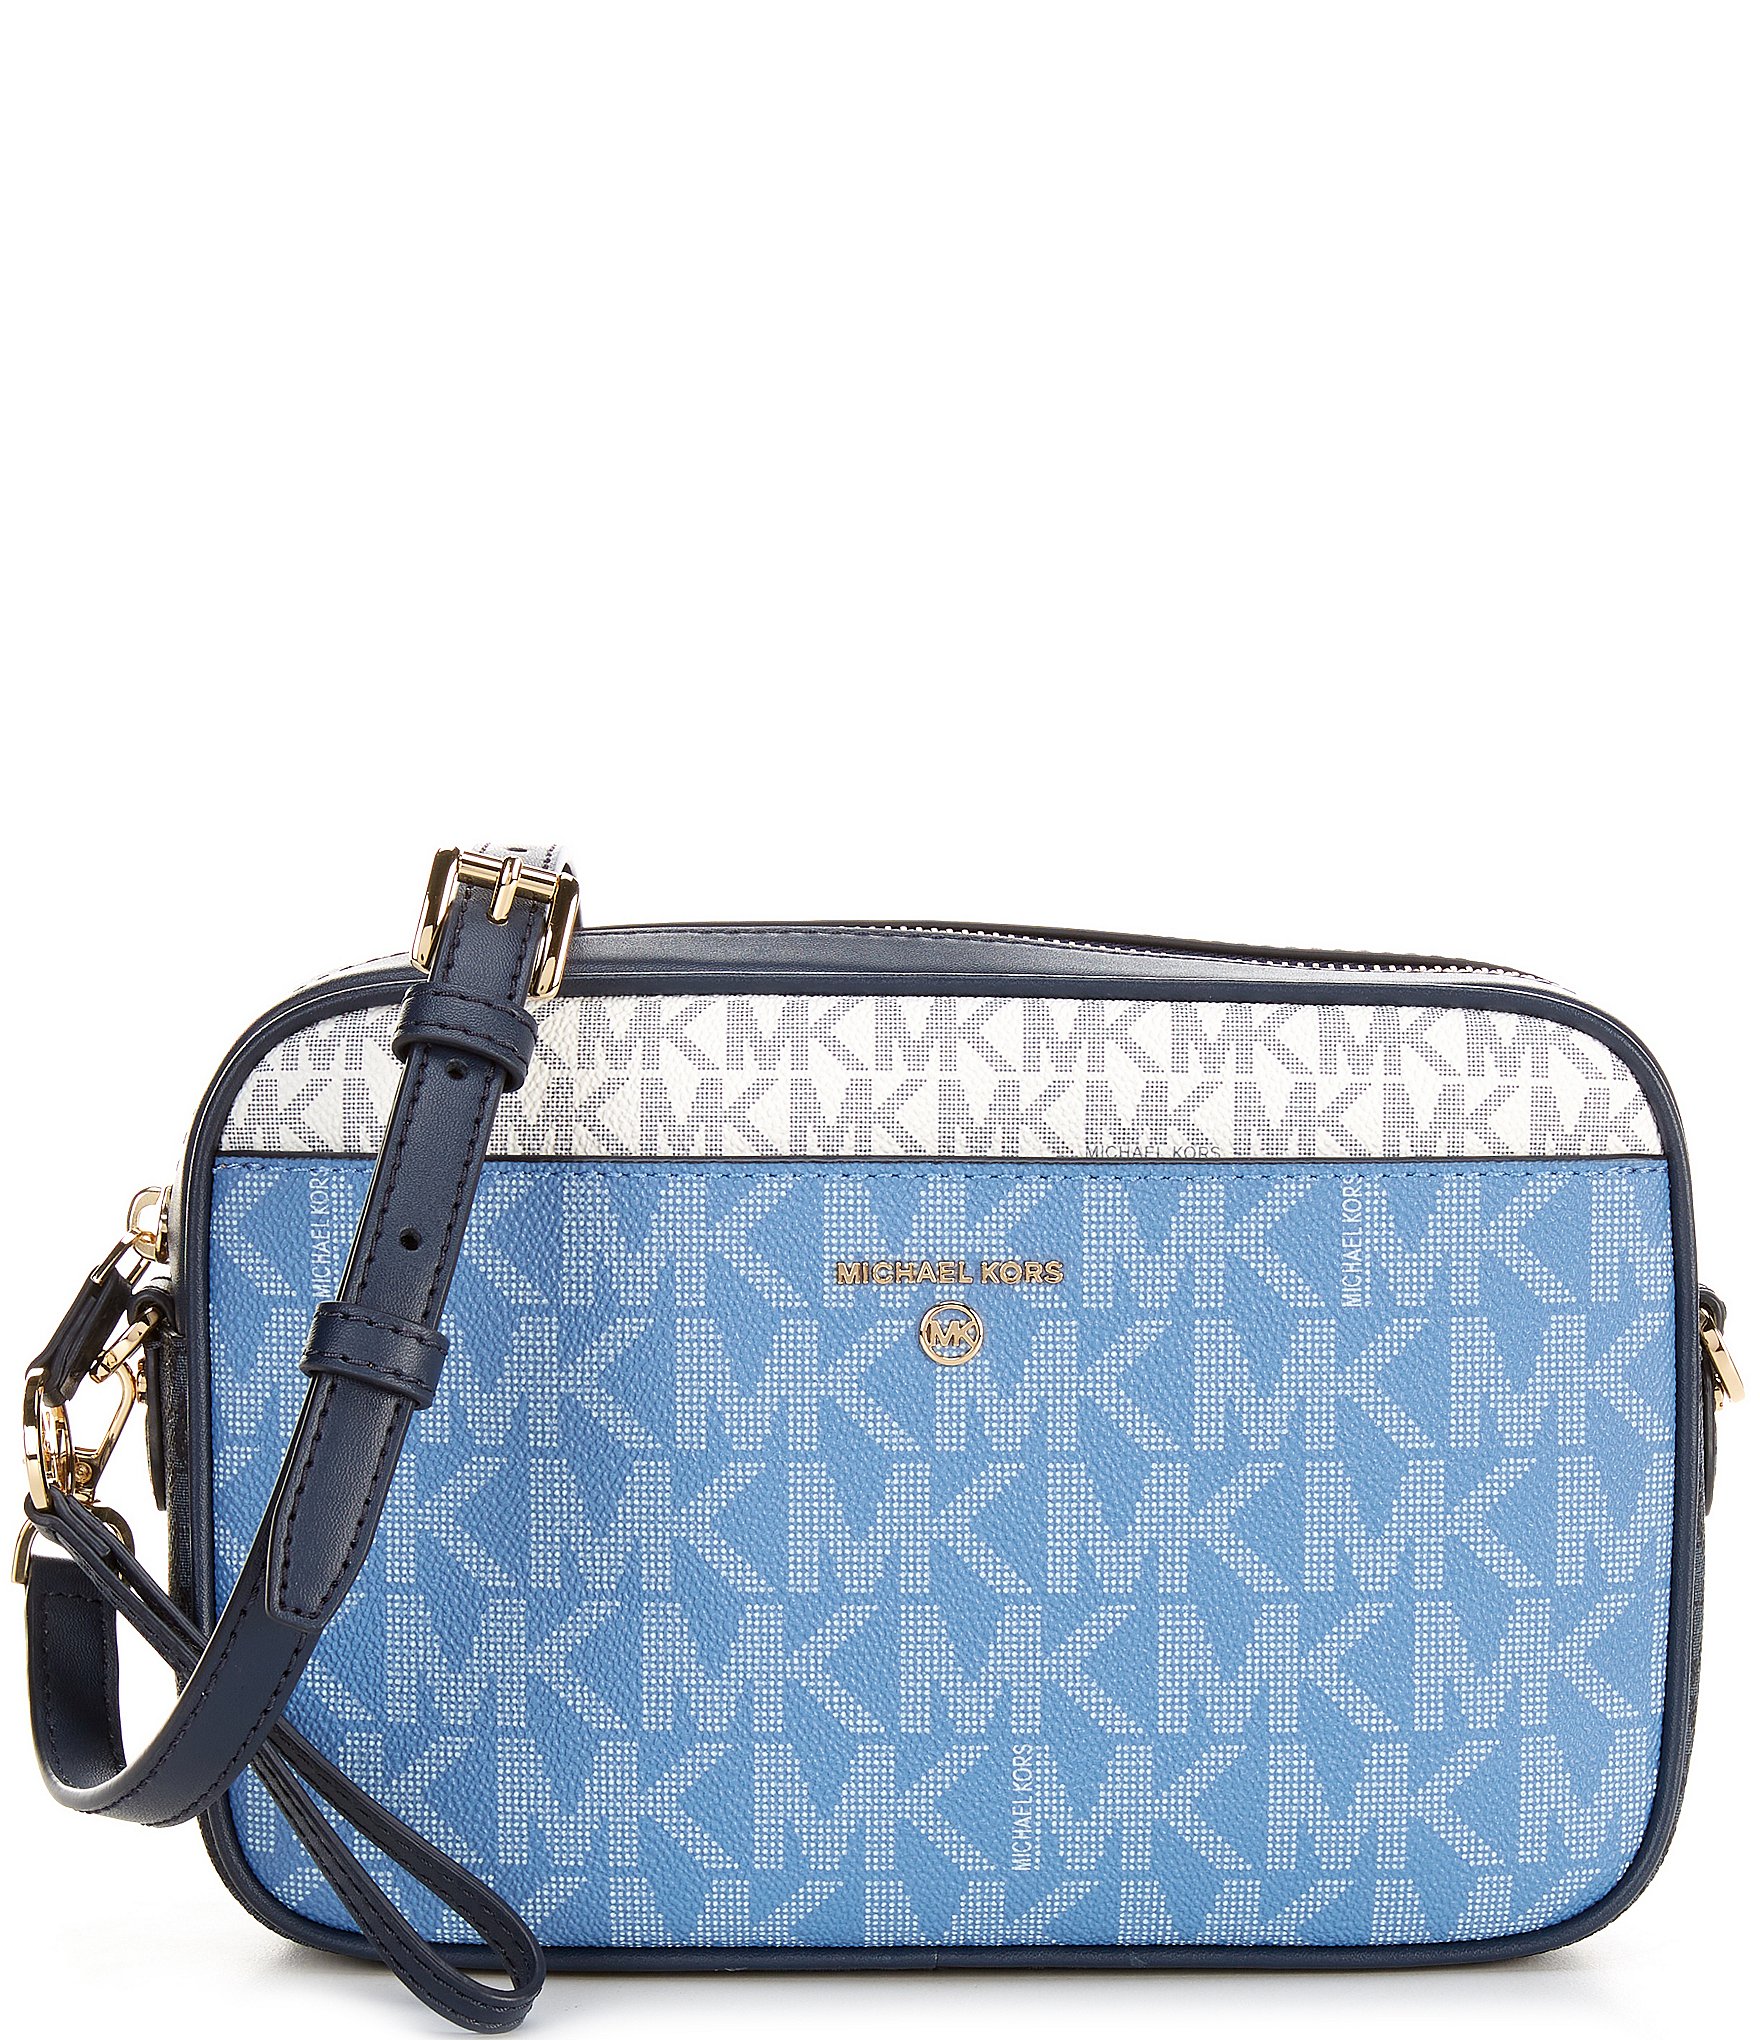 Michael Kors Large Riley Handbag Light Blue Pebble Leather $348 | eBay